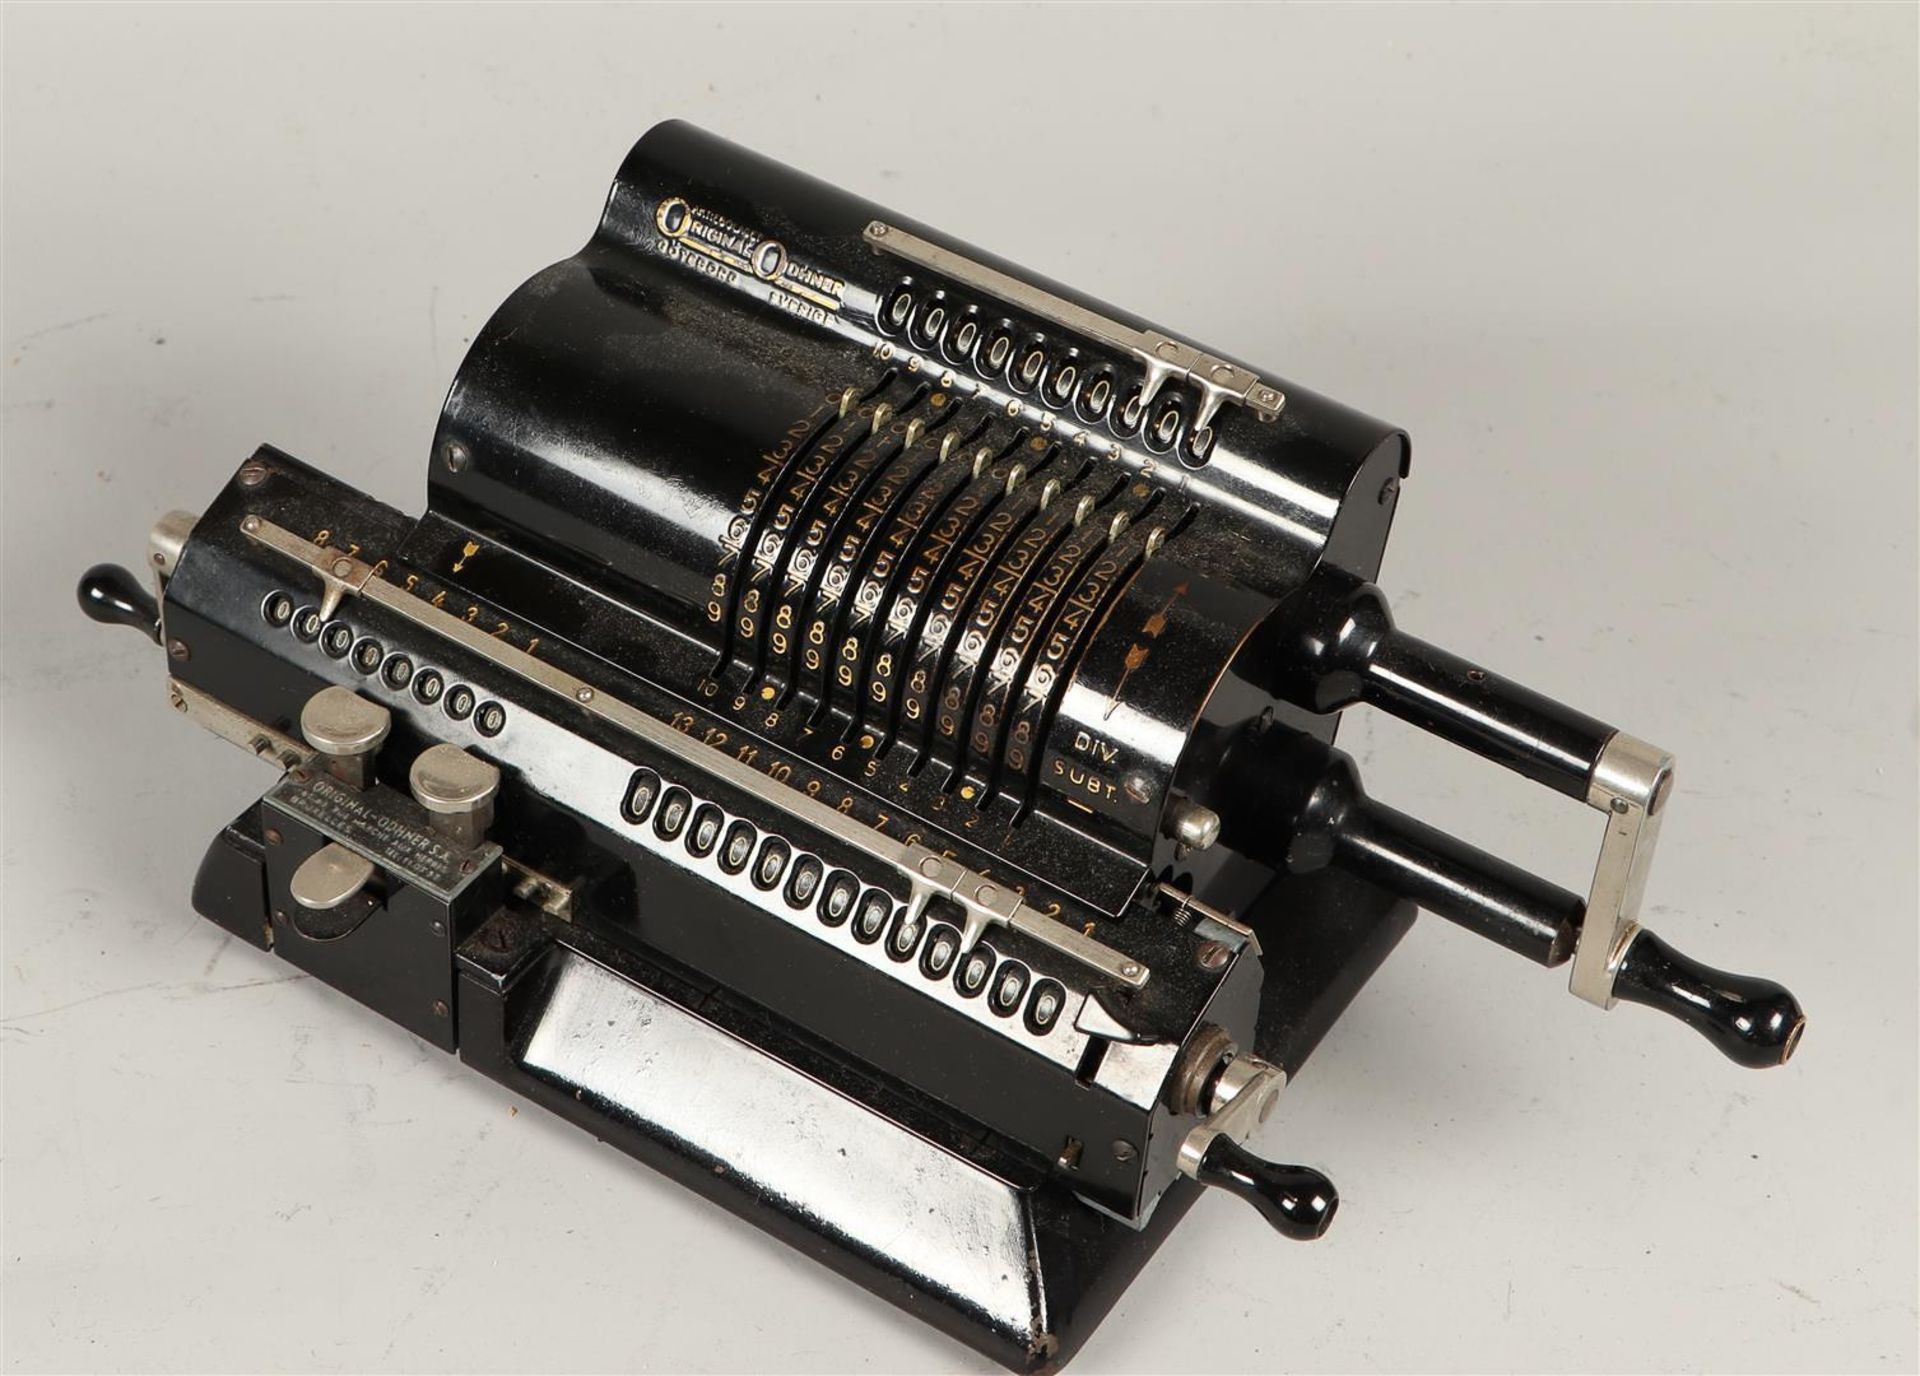 A vintage calculator of the brand Original-Odhner, model 602 N 5. Sweden, first half 20th century. - Image 2 of 4